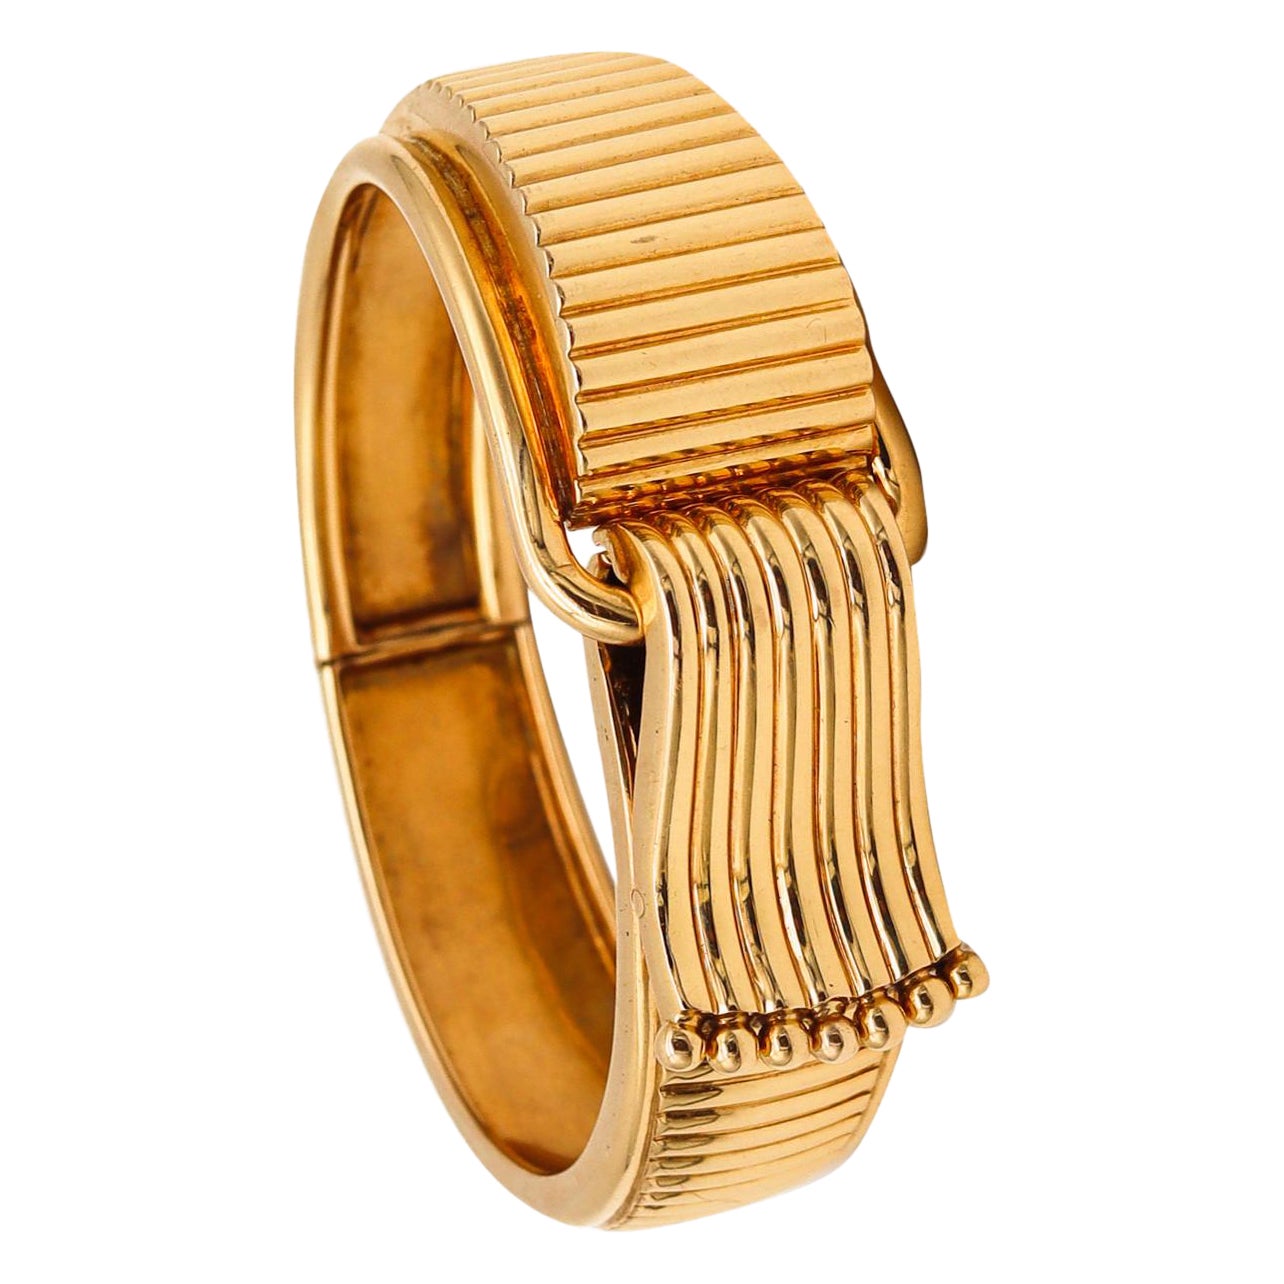 Art Deco 1930 Machine Age Geometric Bangle Bracelet in Solid 18Kt Yellow Gold